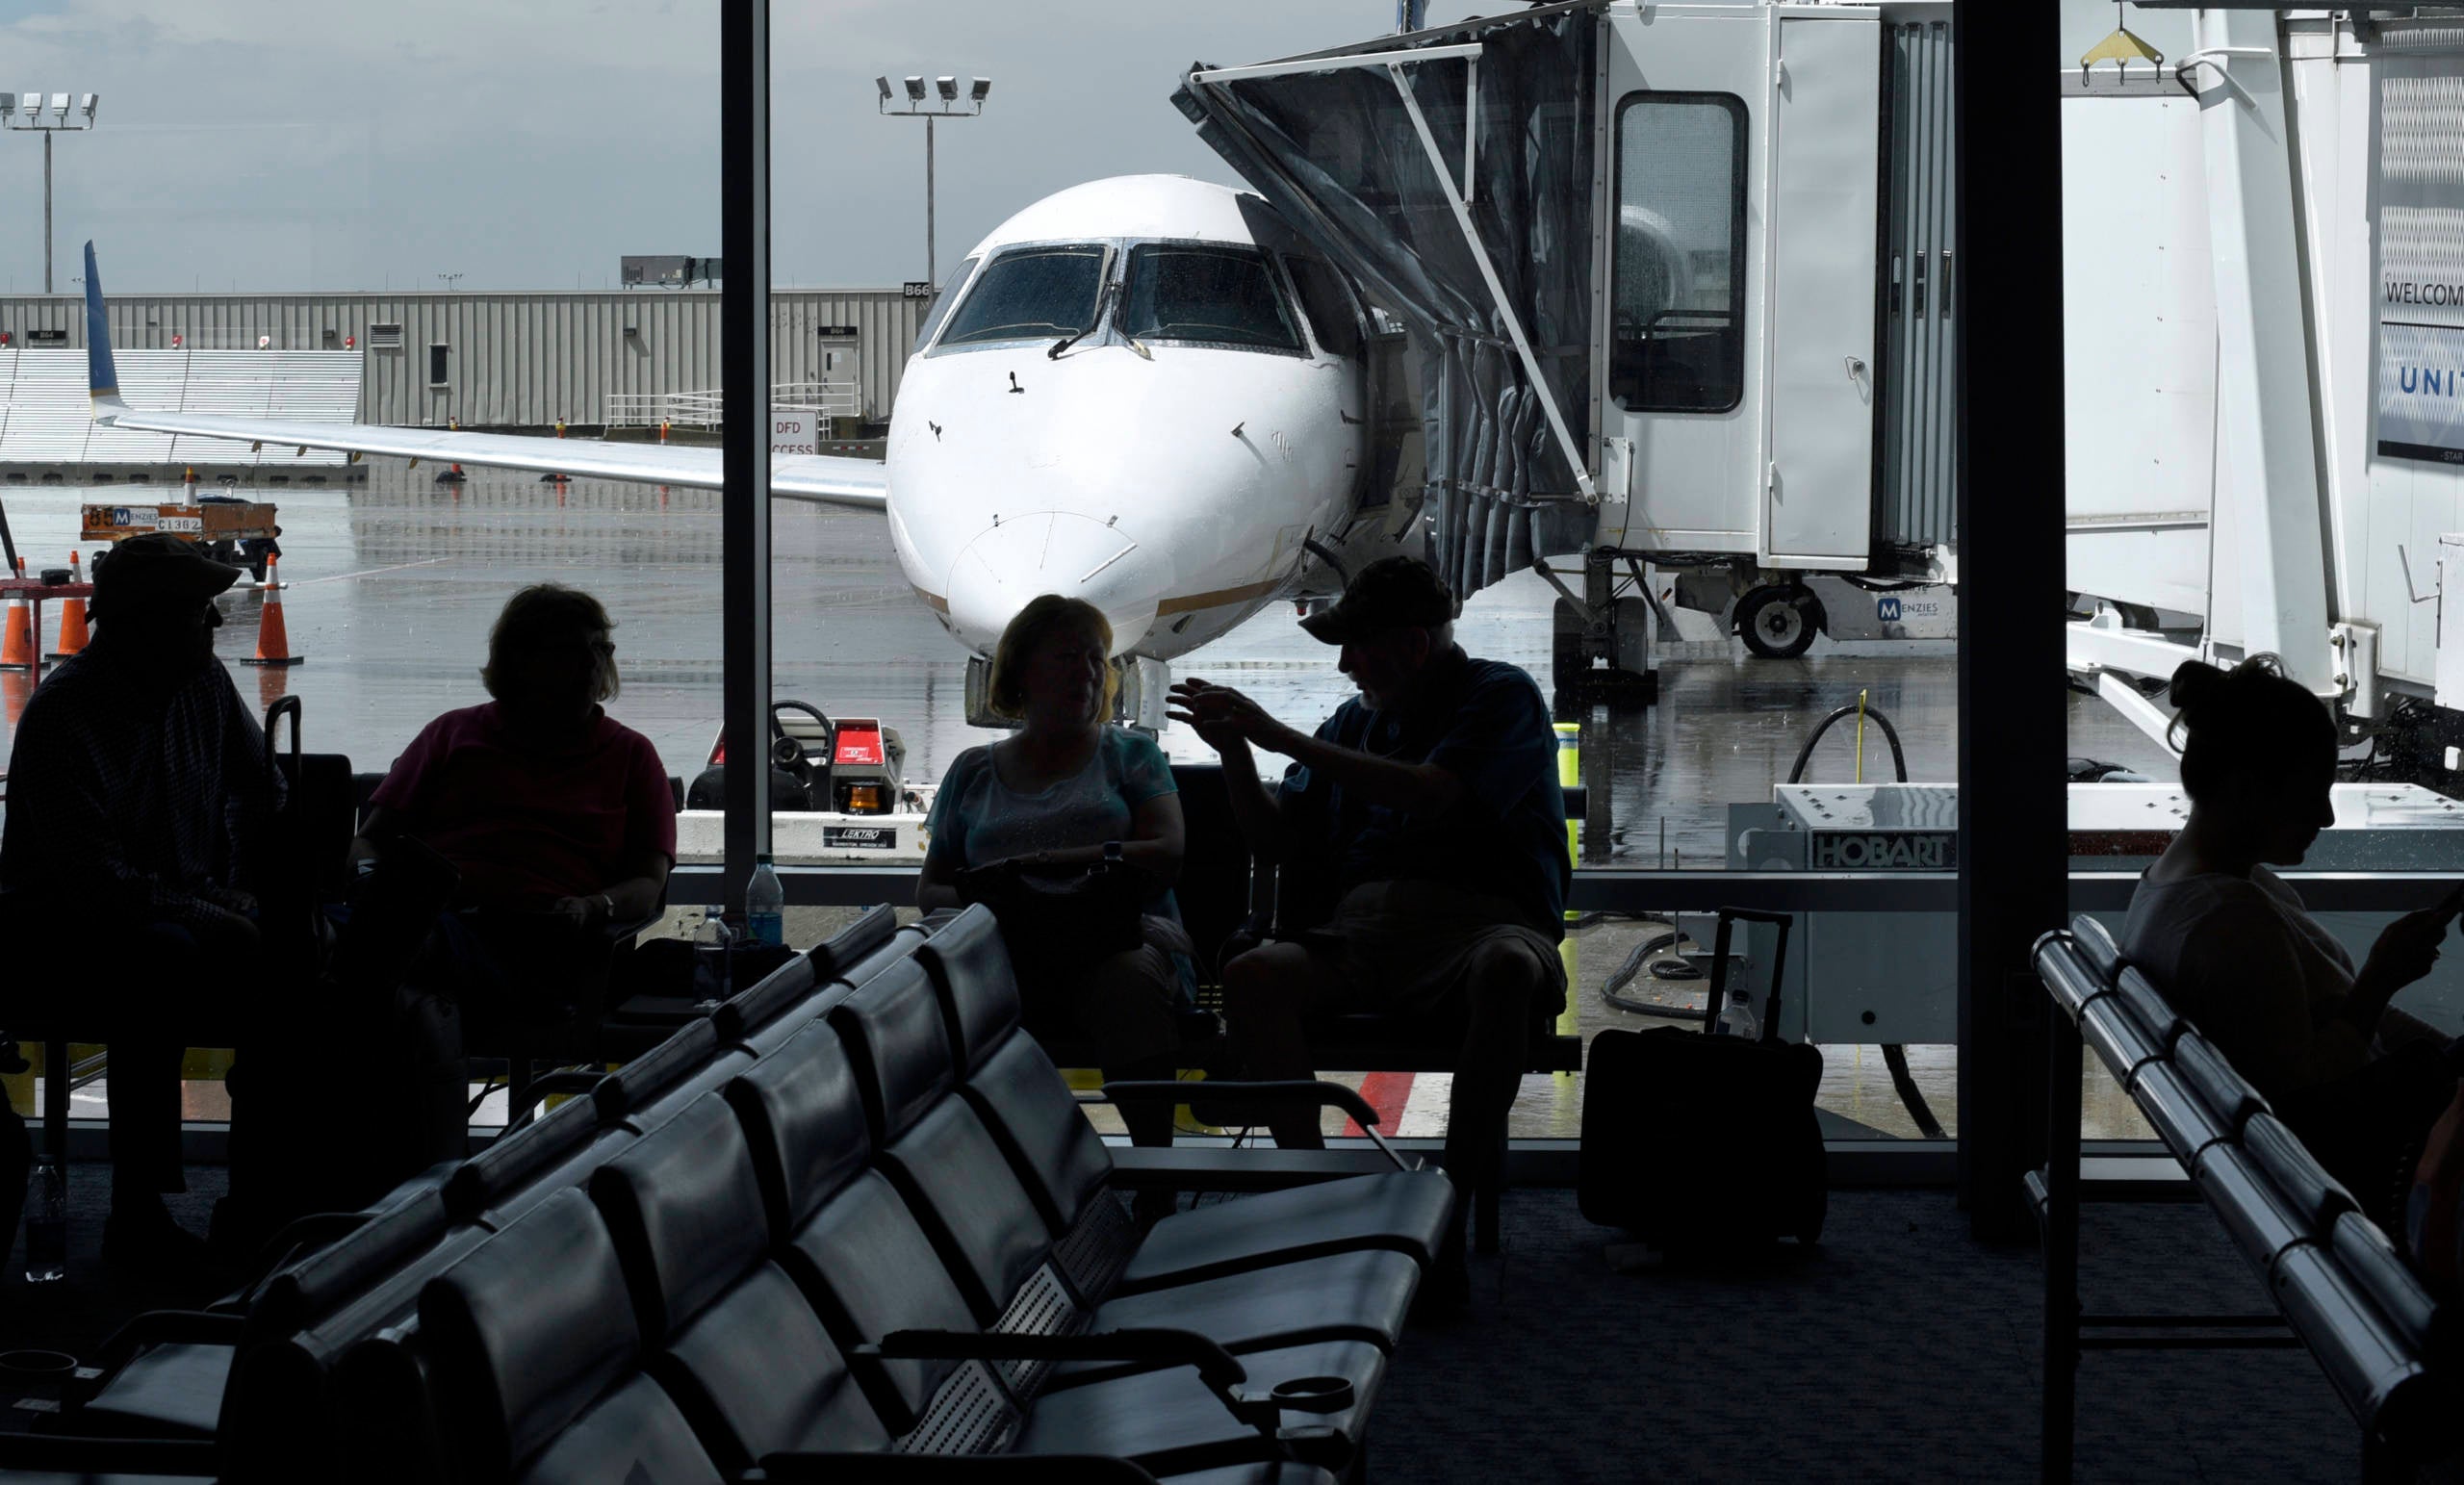 Air passengers waiting for flight at Denver International Airport